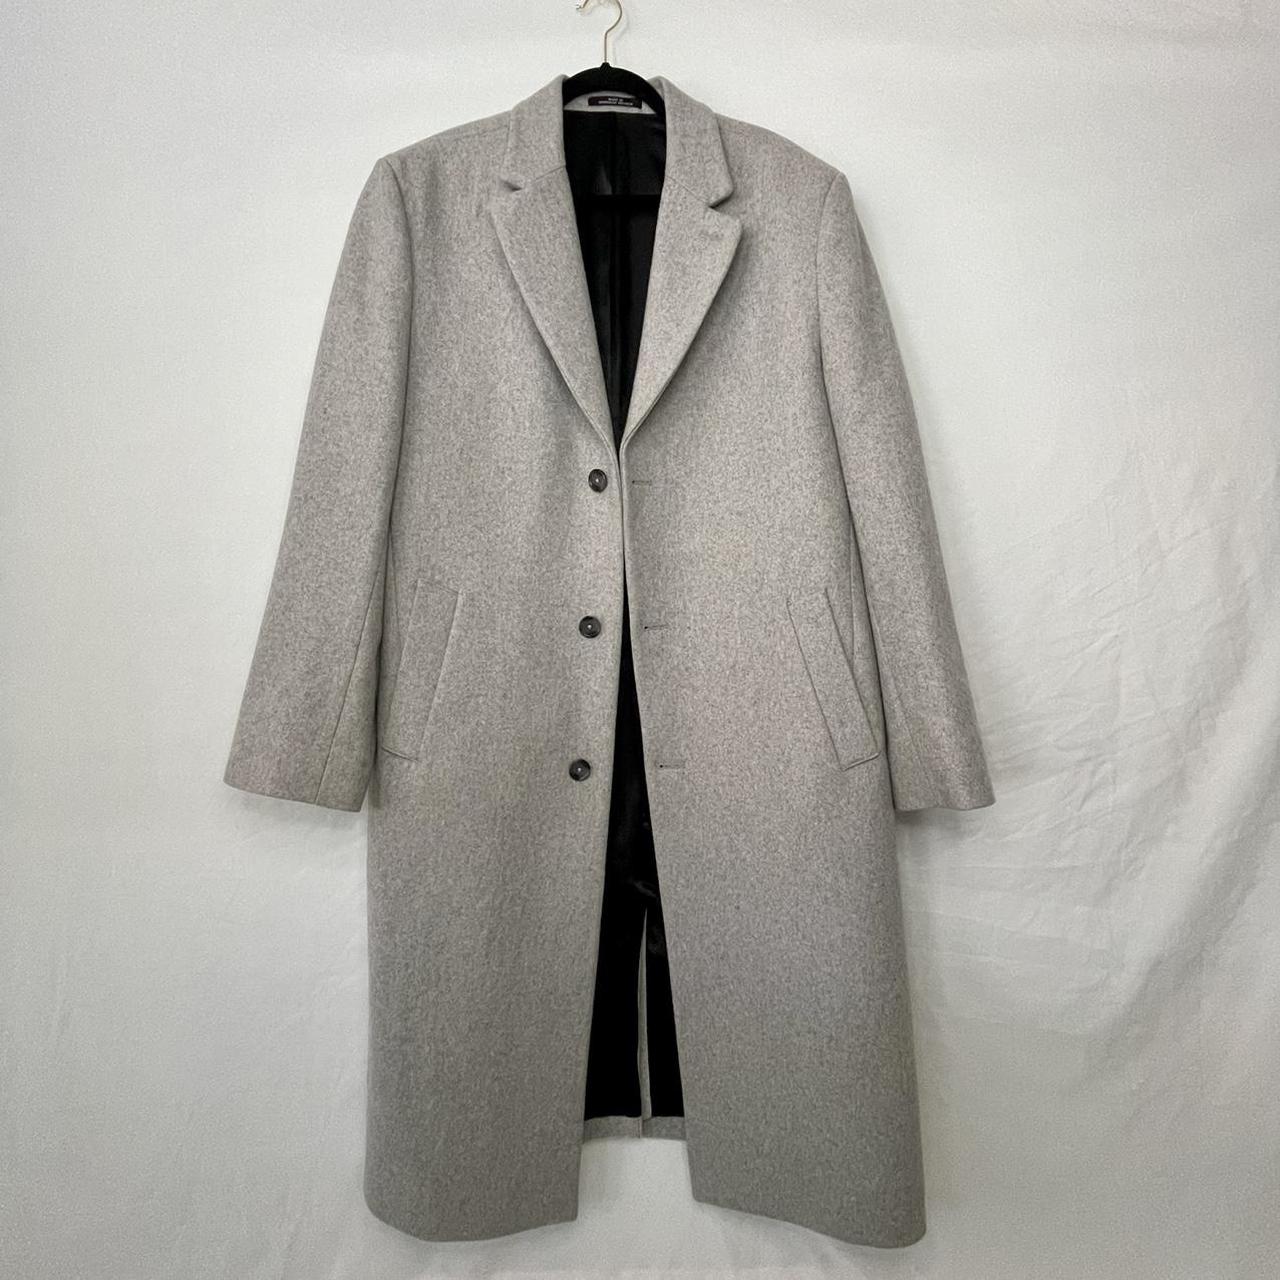 Wool overcoat by Michael Kors, size mens 42 L, 3... - Depop